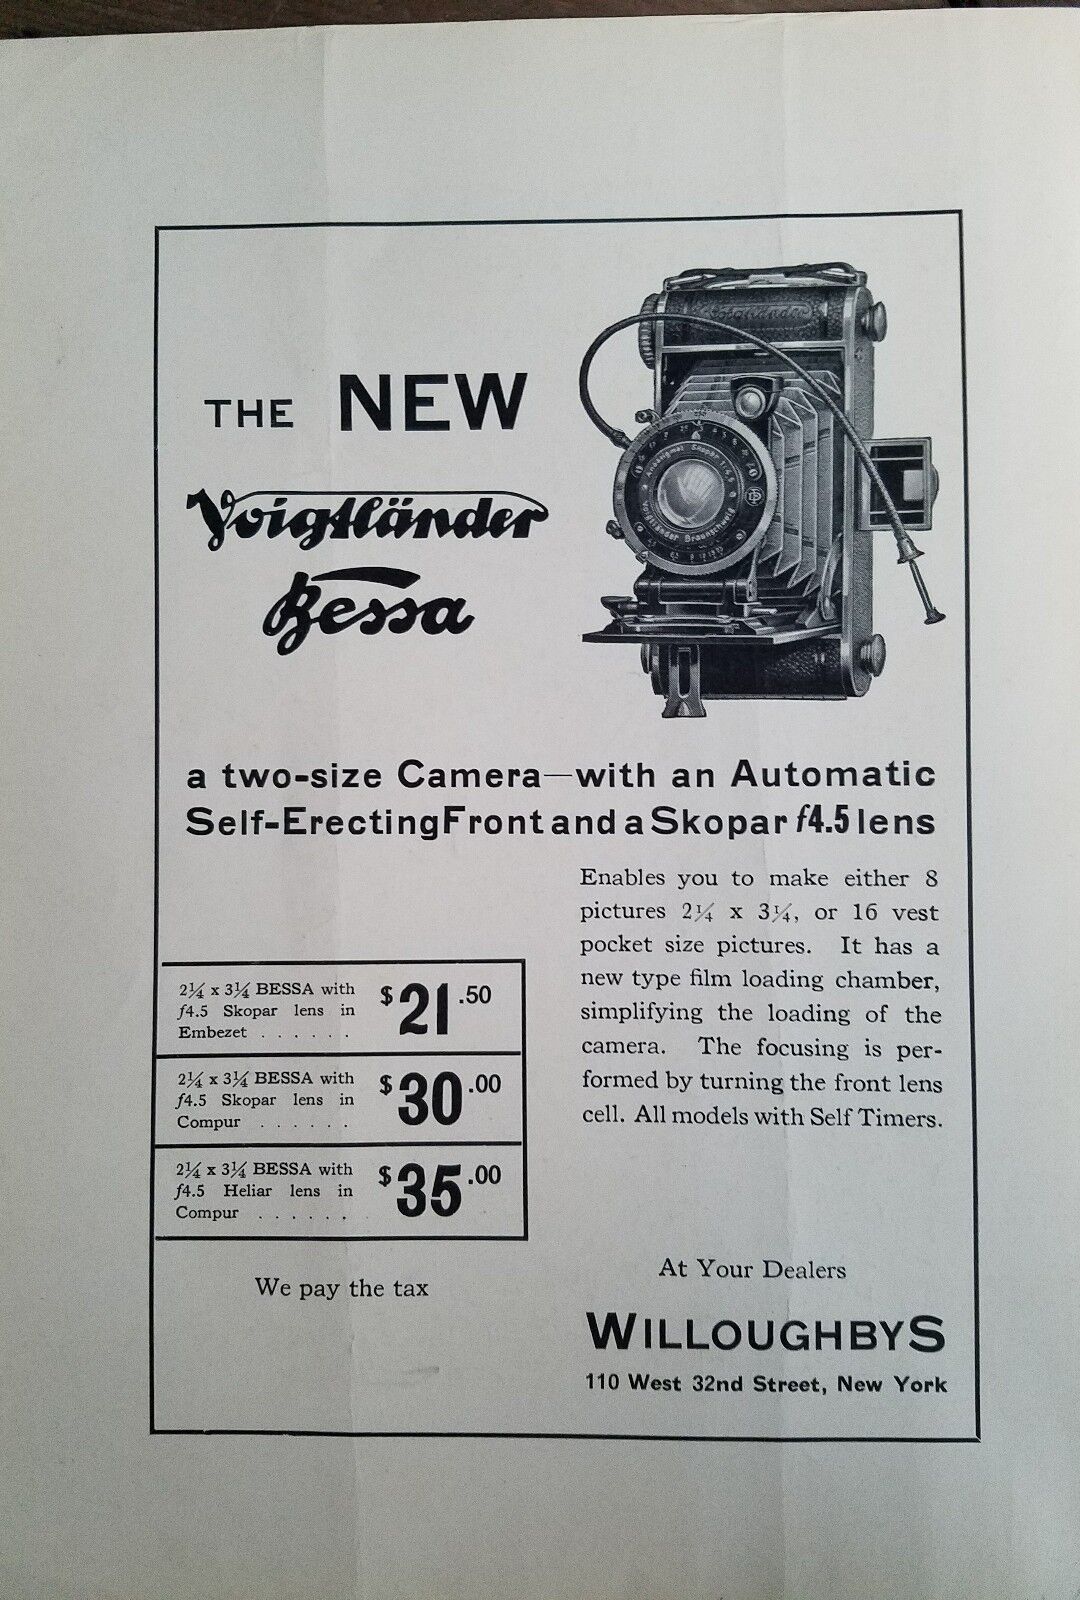 1932 vintage voigtlander Bessa camera skopar lens self erecting front ad